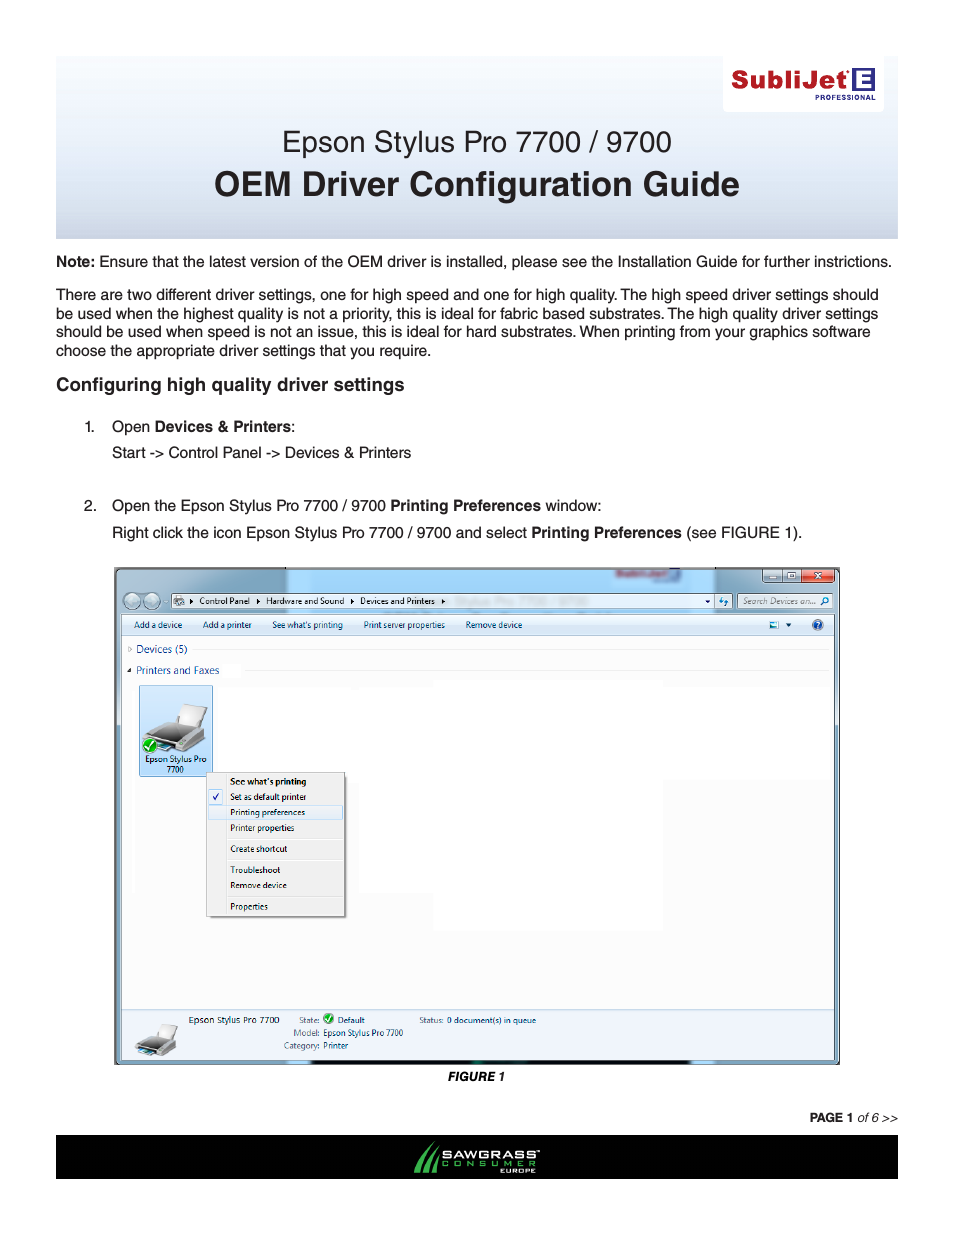 SubliJet E Epson Stylus Pro 7700 (Windows ICC Profile Setup): Driver Configuration Guide